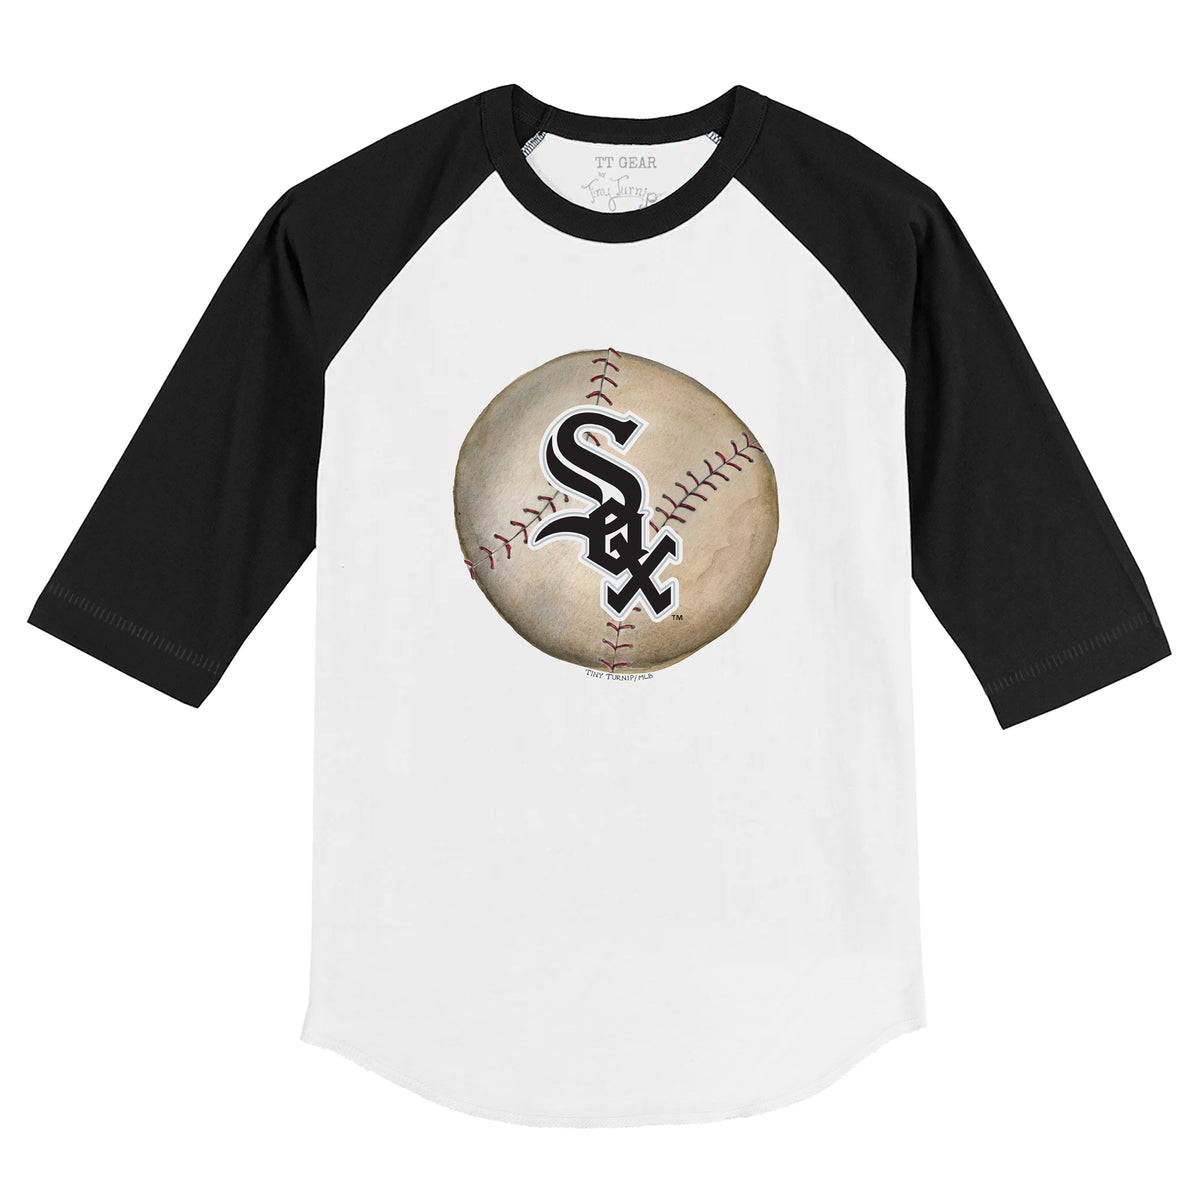 Chicago White Sox Stitched Baseball 3/4 Black Sleeve Raglan